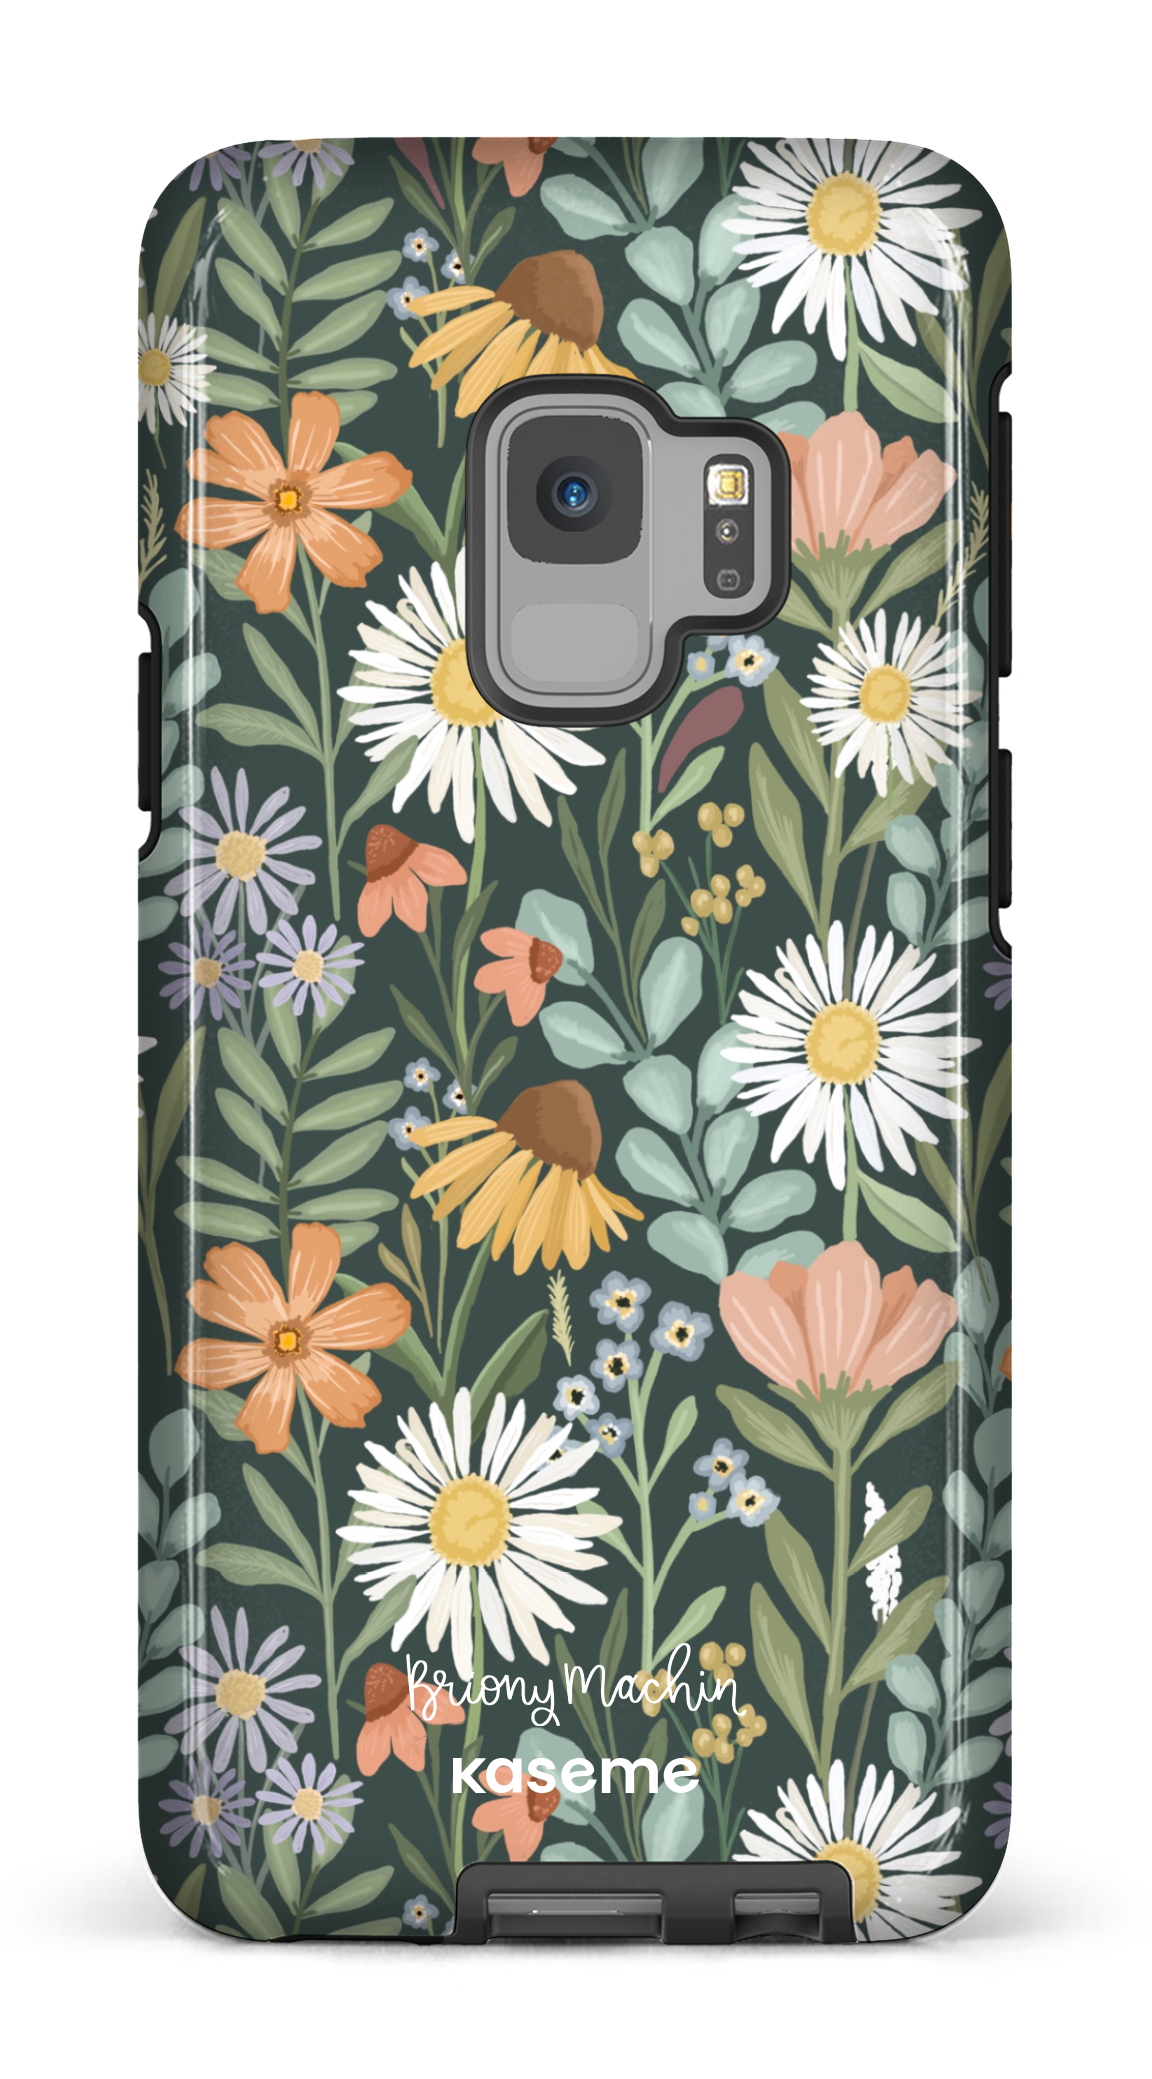 Sending Flowers Green by Briony Machin - Galaxy S9